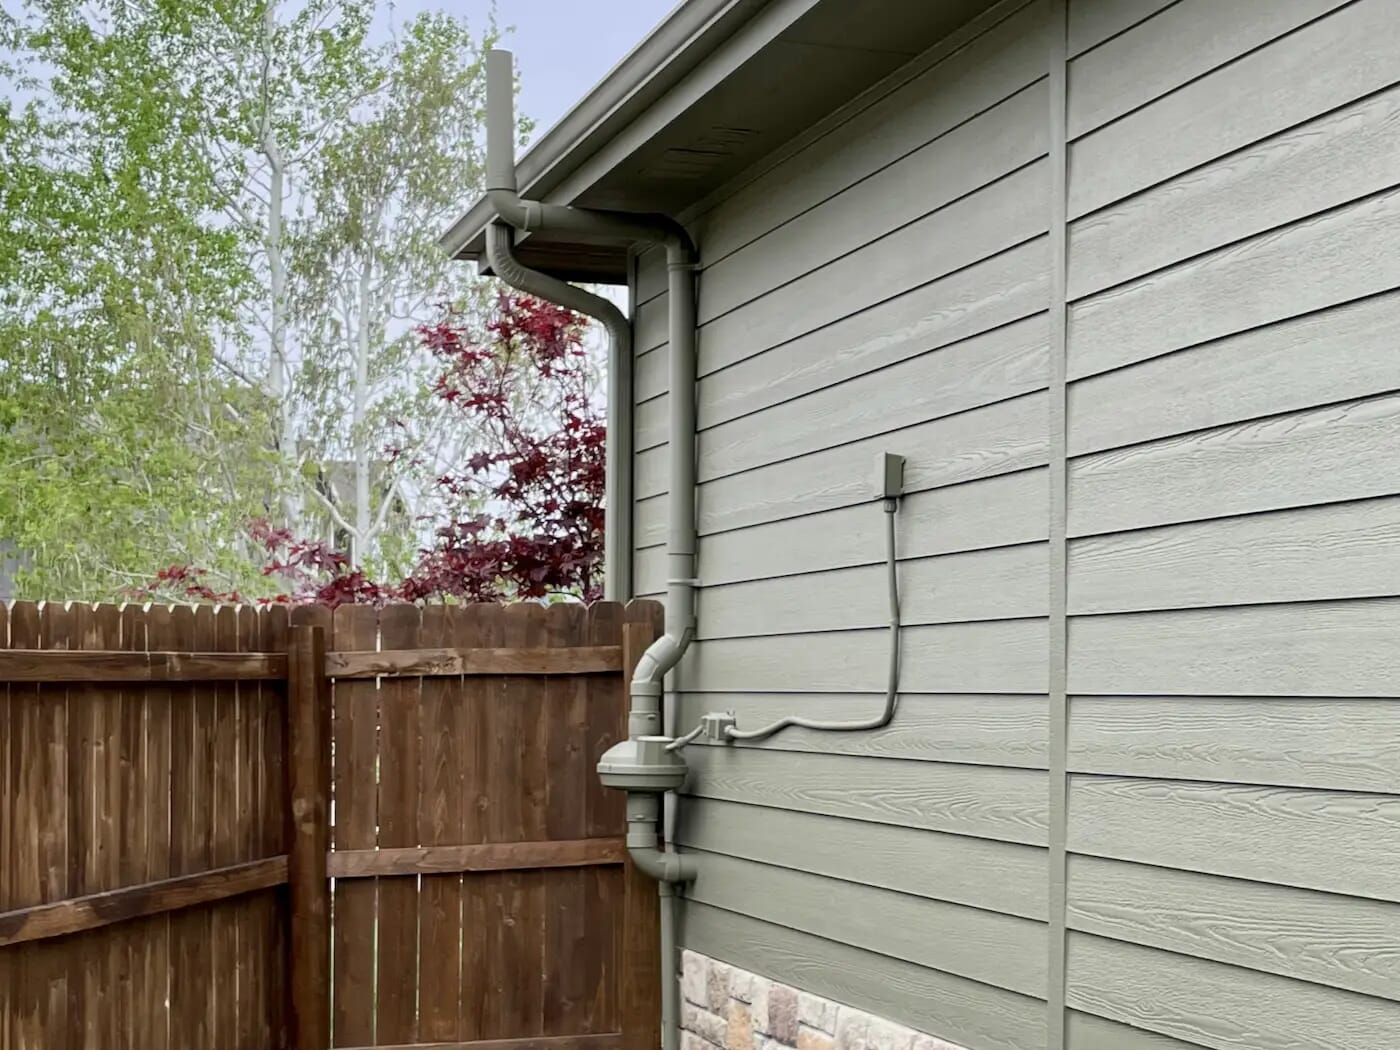 Radon Mitigation System With Fan Installed on Exterior of Home in Omaha, Nebraska